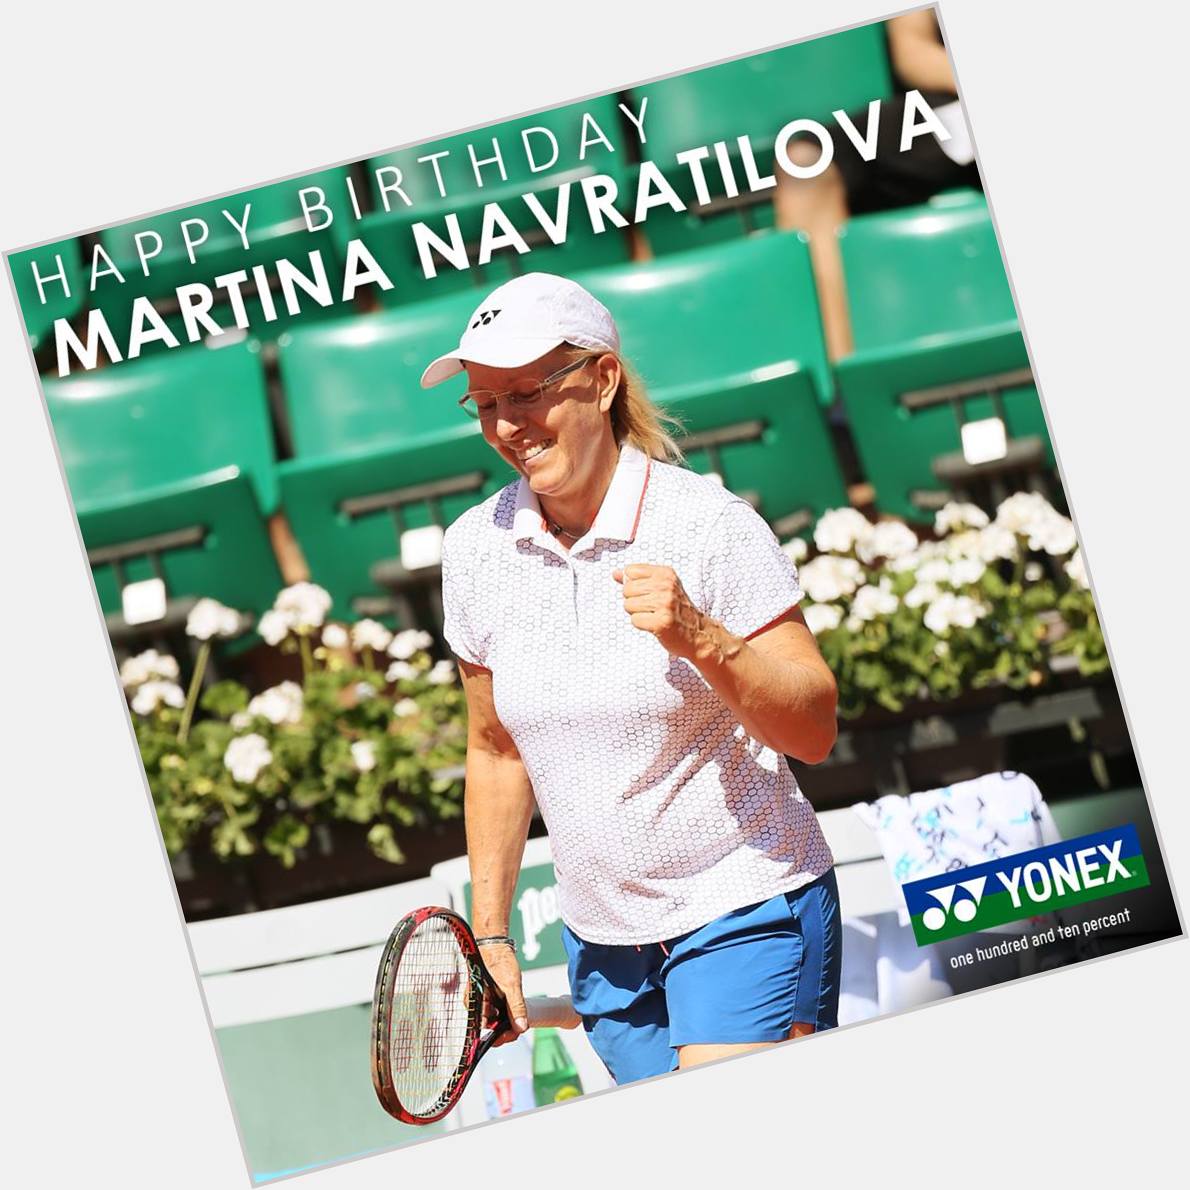 Happy birthday to Grand Slam champion and legend Navratilova.  